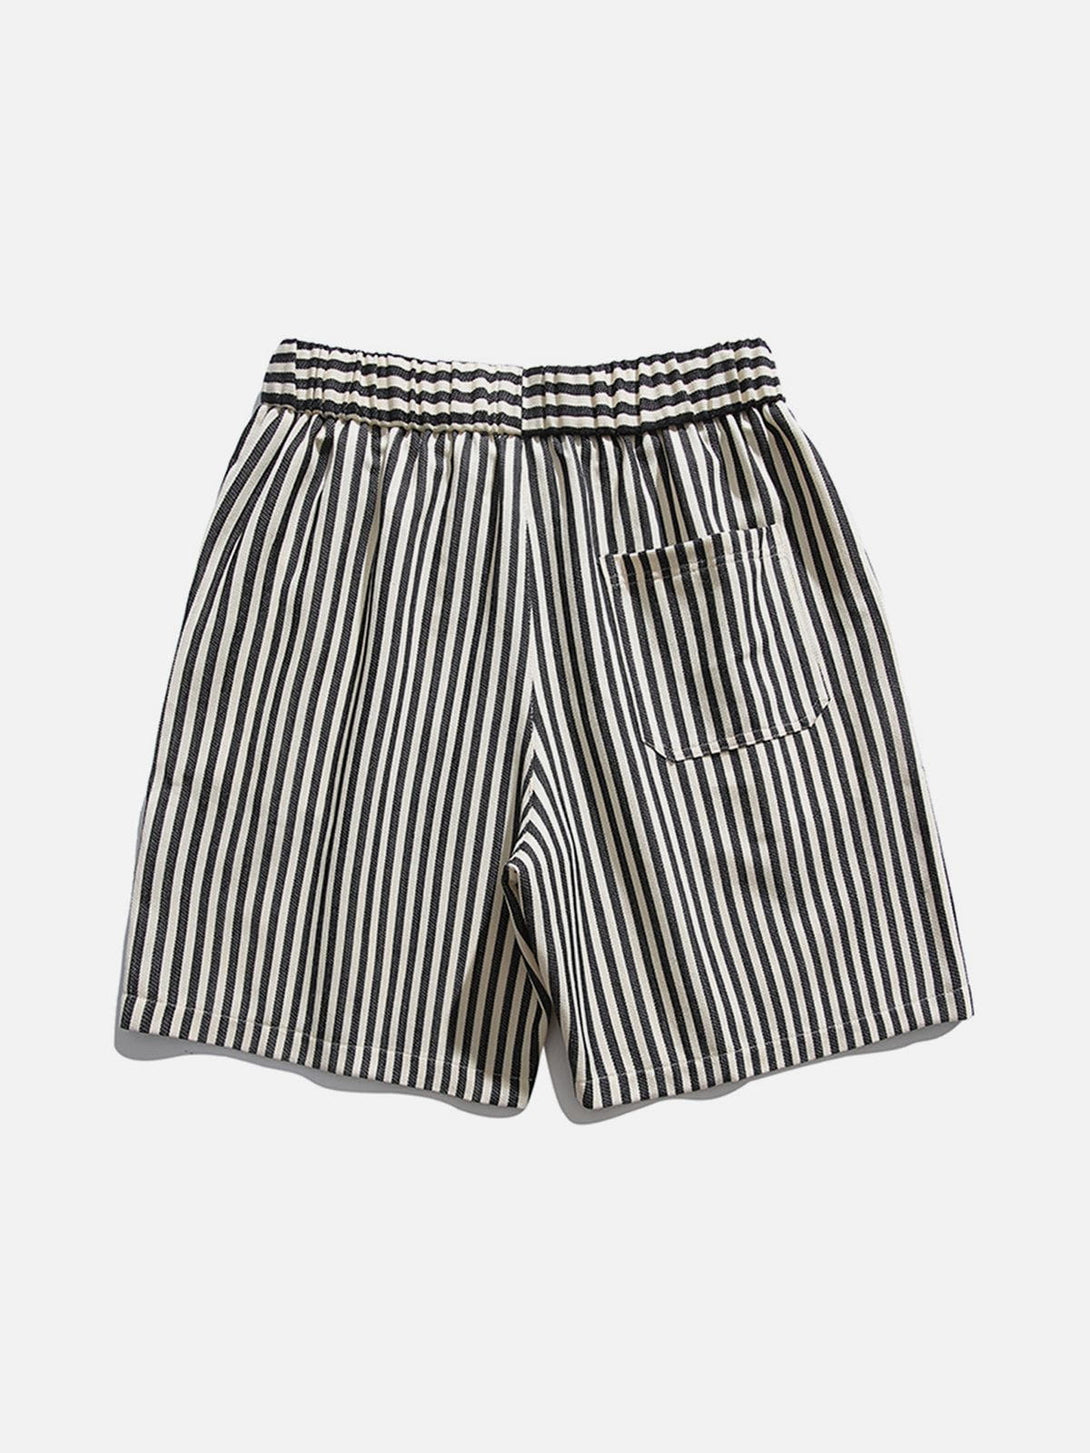 Majesda® - Striped Print Loose Drawstring Shorts outfit ideas streetwear fashion